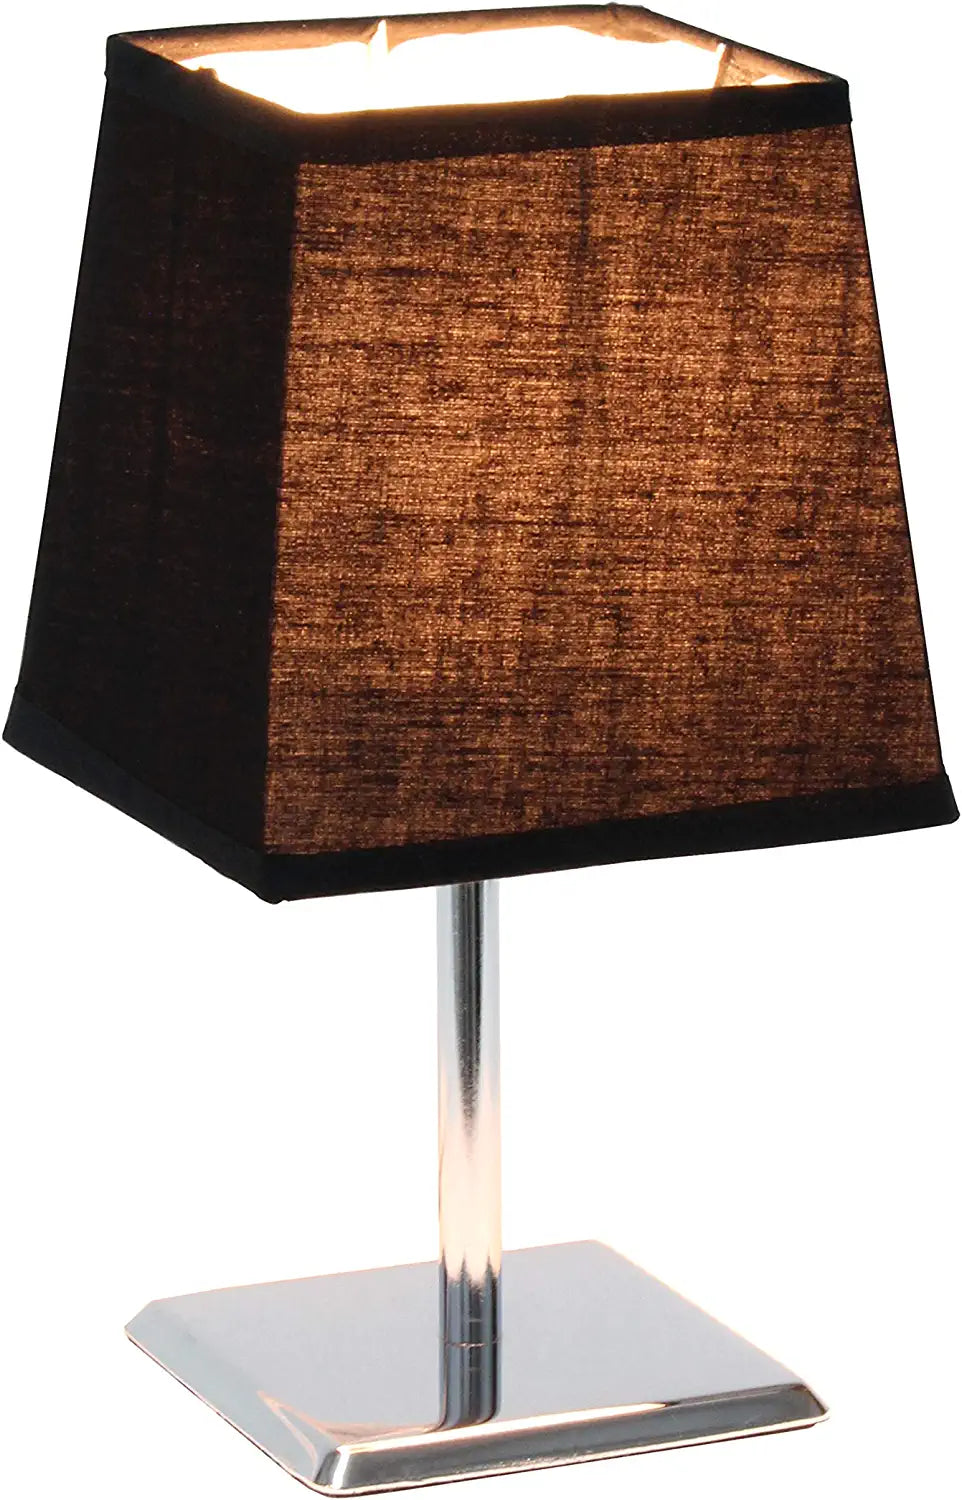 Simple Designs LT2062-BLK Mini Chrome Squared Empire Fabric Shade Table Lamp, Black